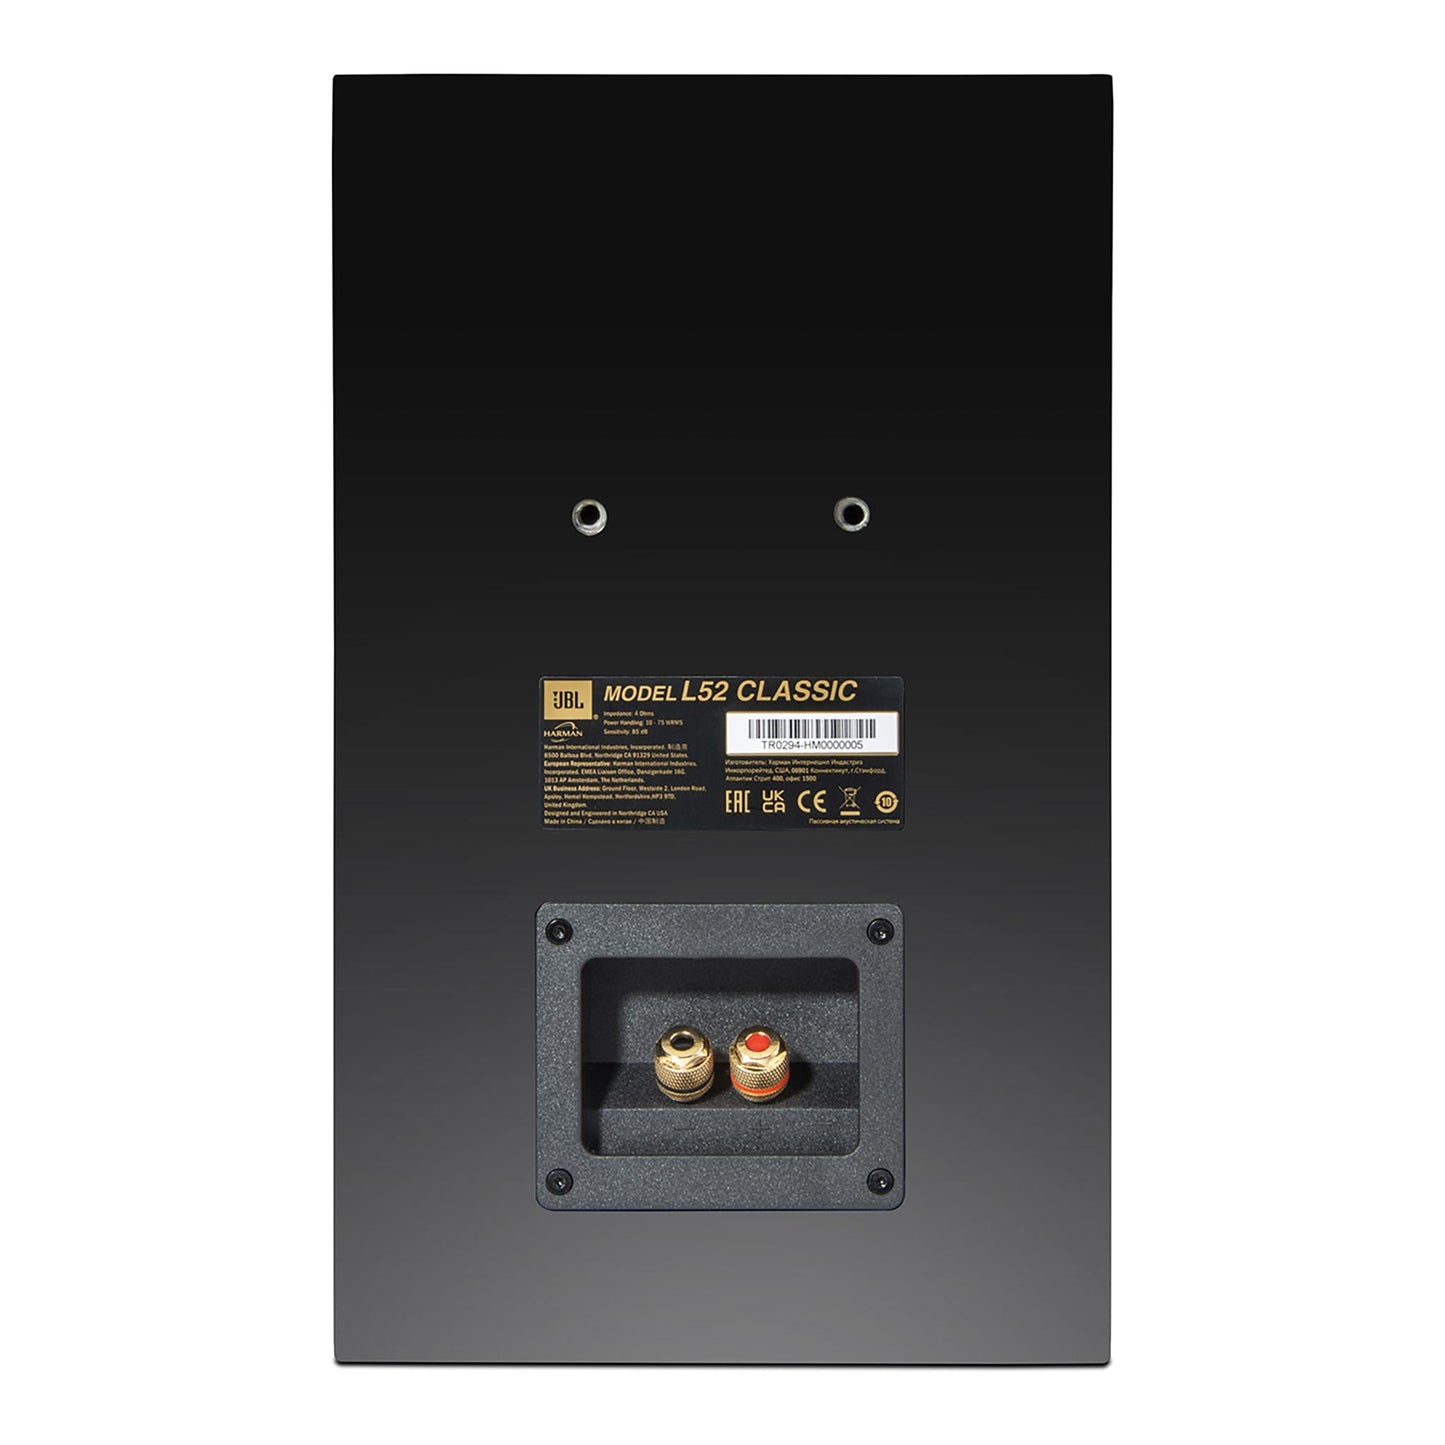 JBL L52 Classic Black Limited Edition Loudspeaker (pair)